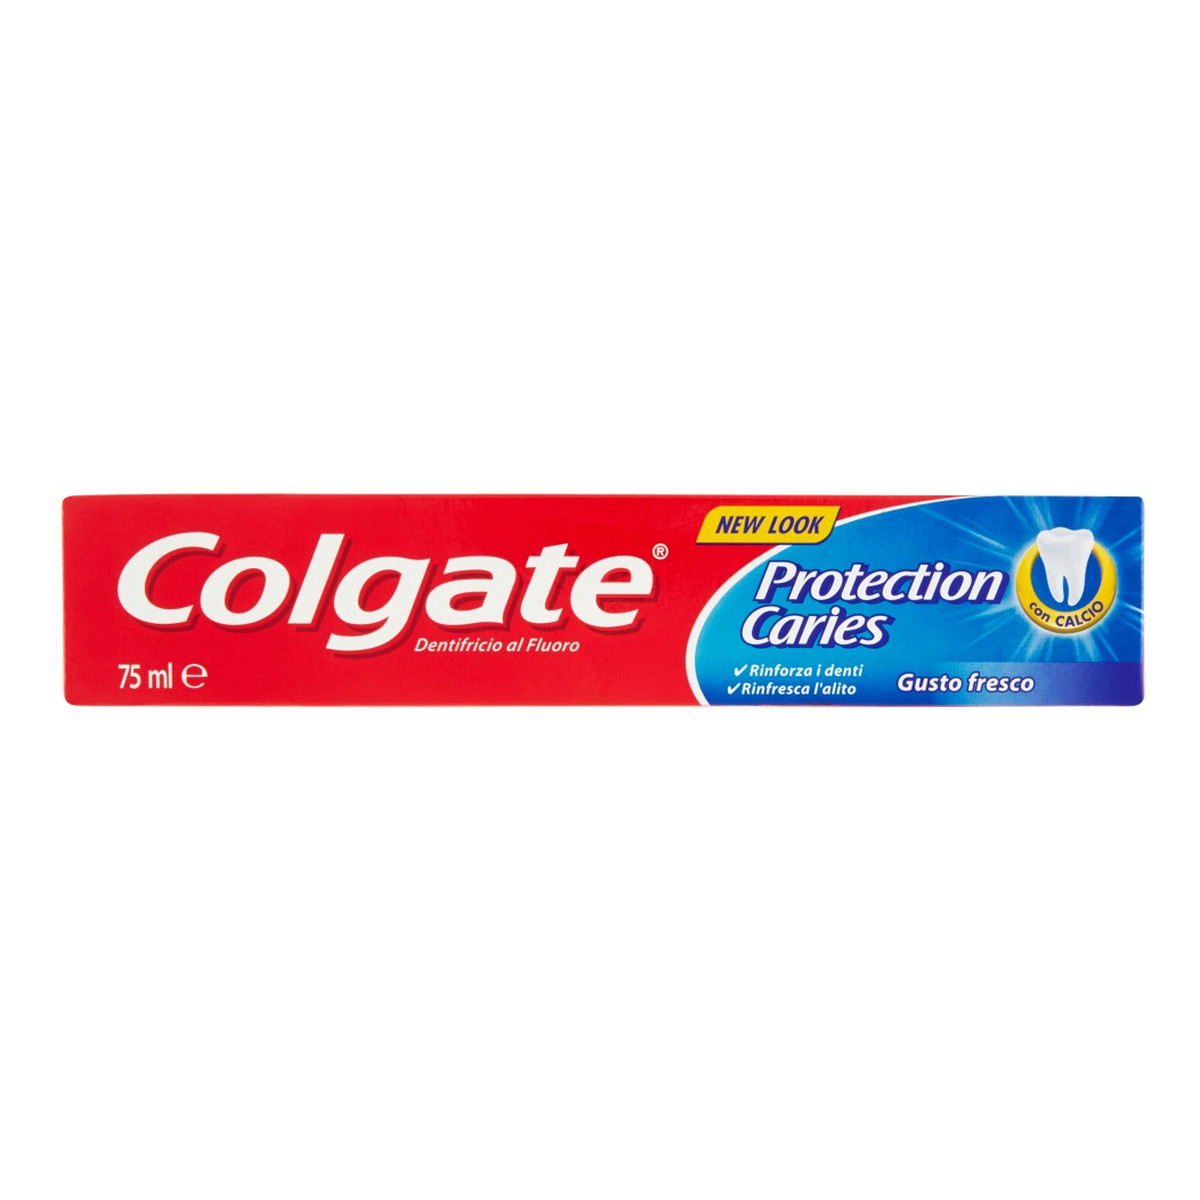 Colgate Protection caries pasta do zębów 75ml